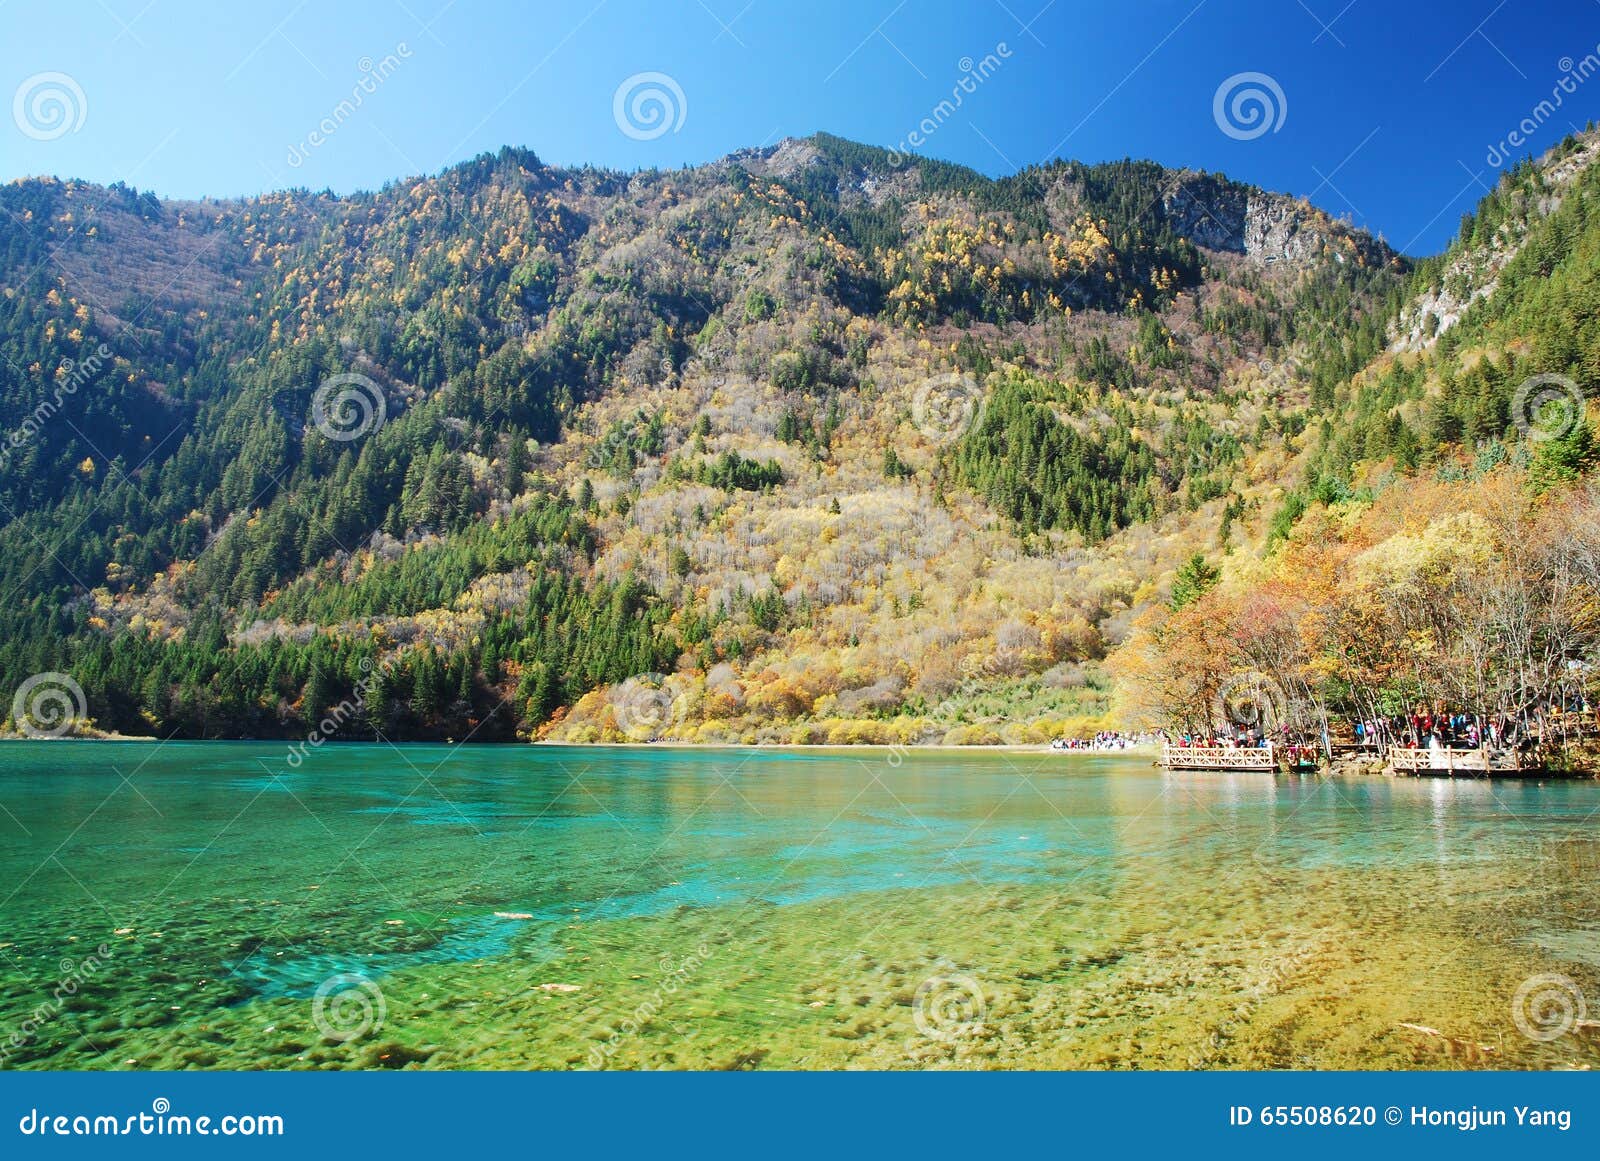 Jiuzhaigou Colorful Lake Editorial Image Image Of Main 65508620